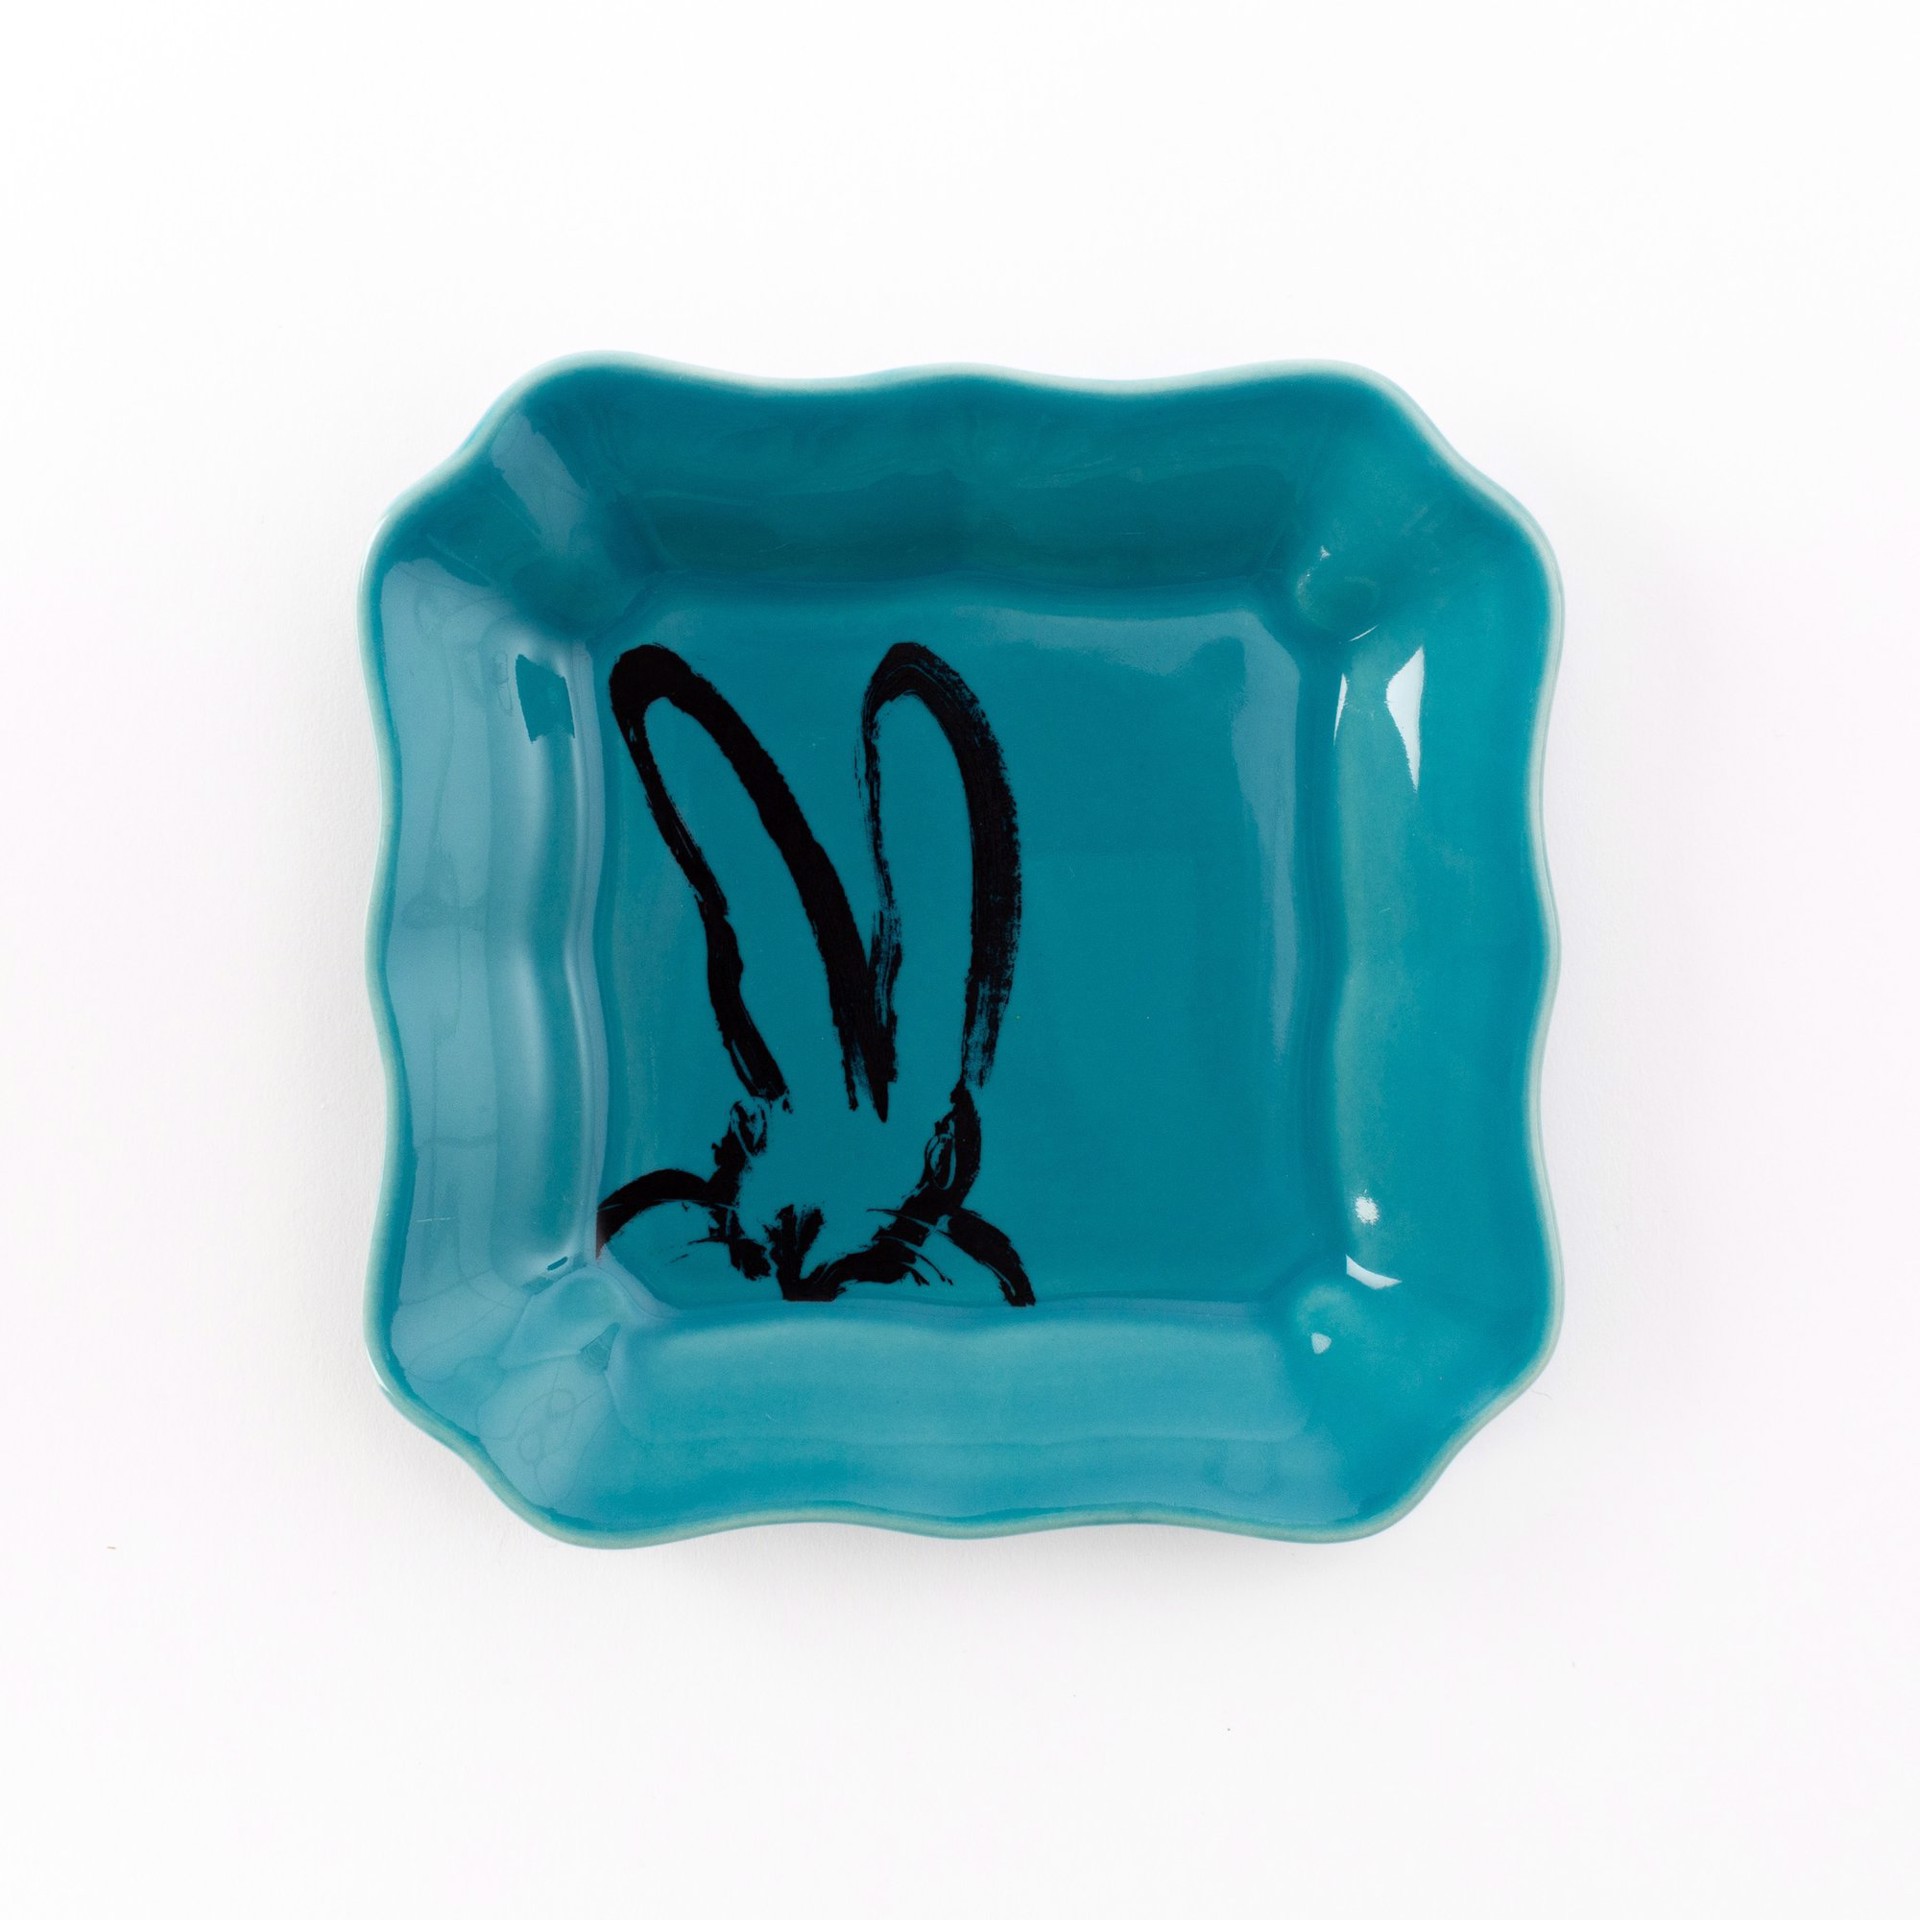 Bunny Portrait Plate - Teal by Hunt Slonem (Hop Up Shop)